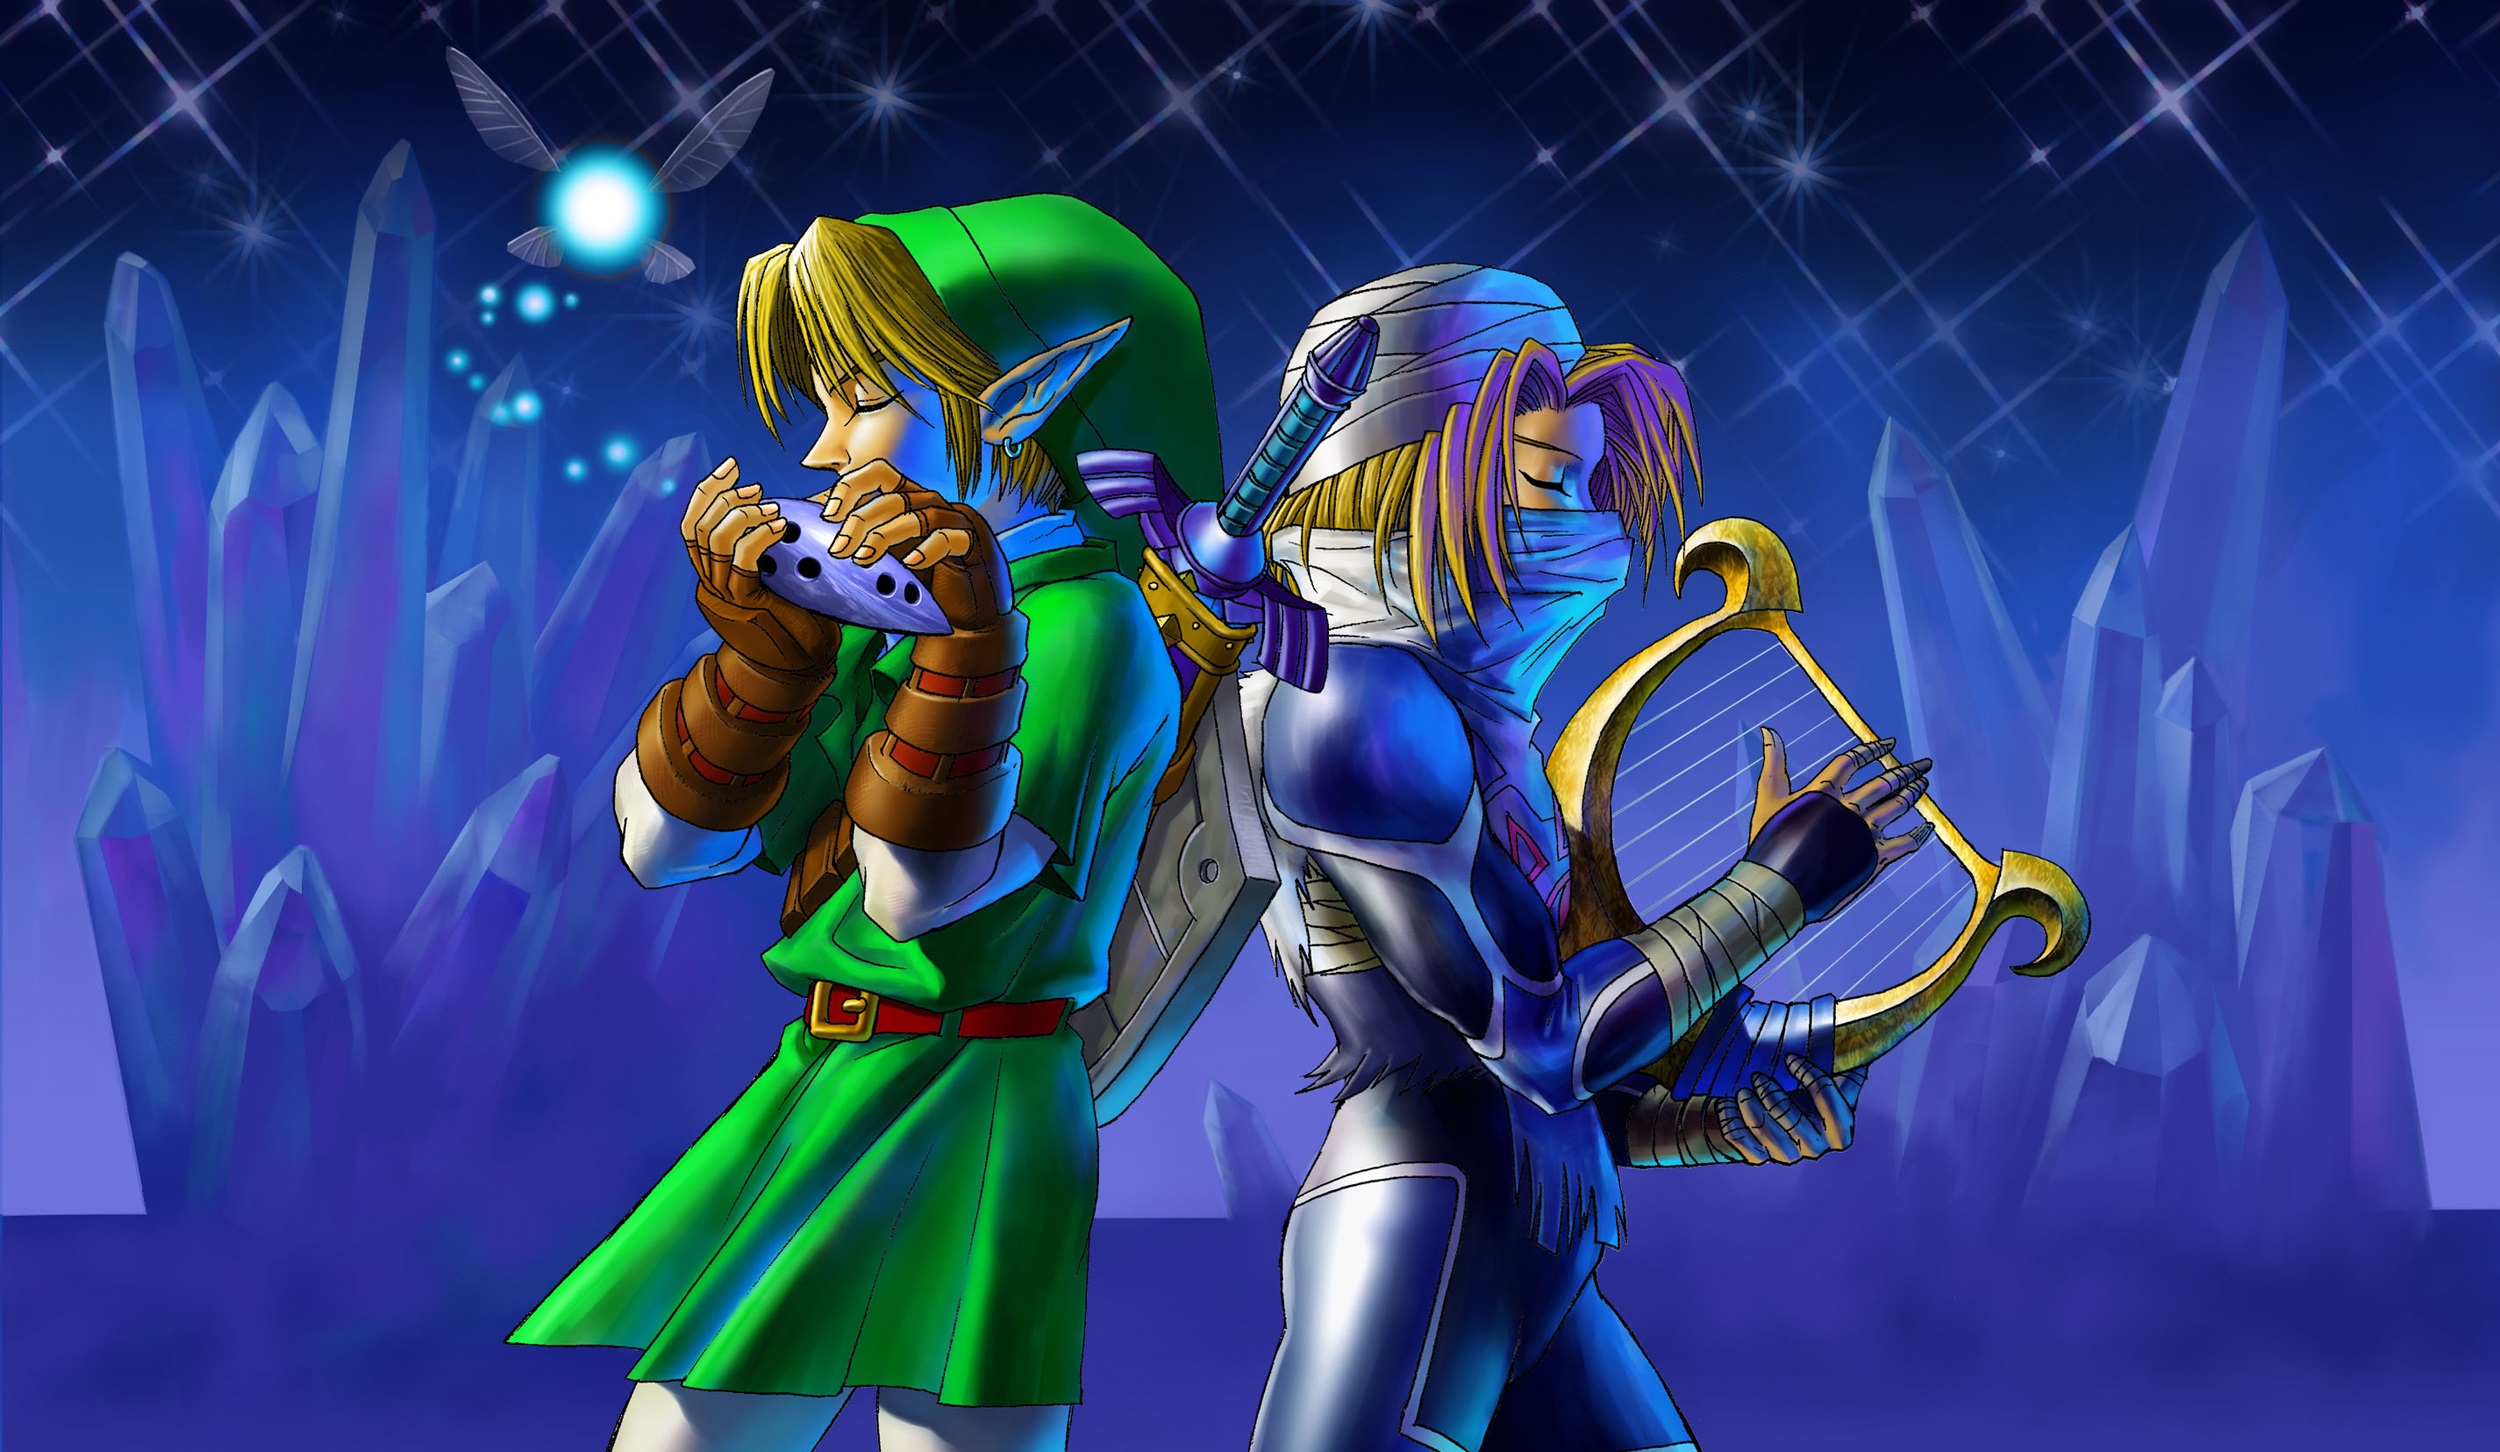 Legend of Zelda, The: Ocarina of Time (Nintendo 64) · RetroAchievements